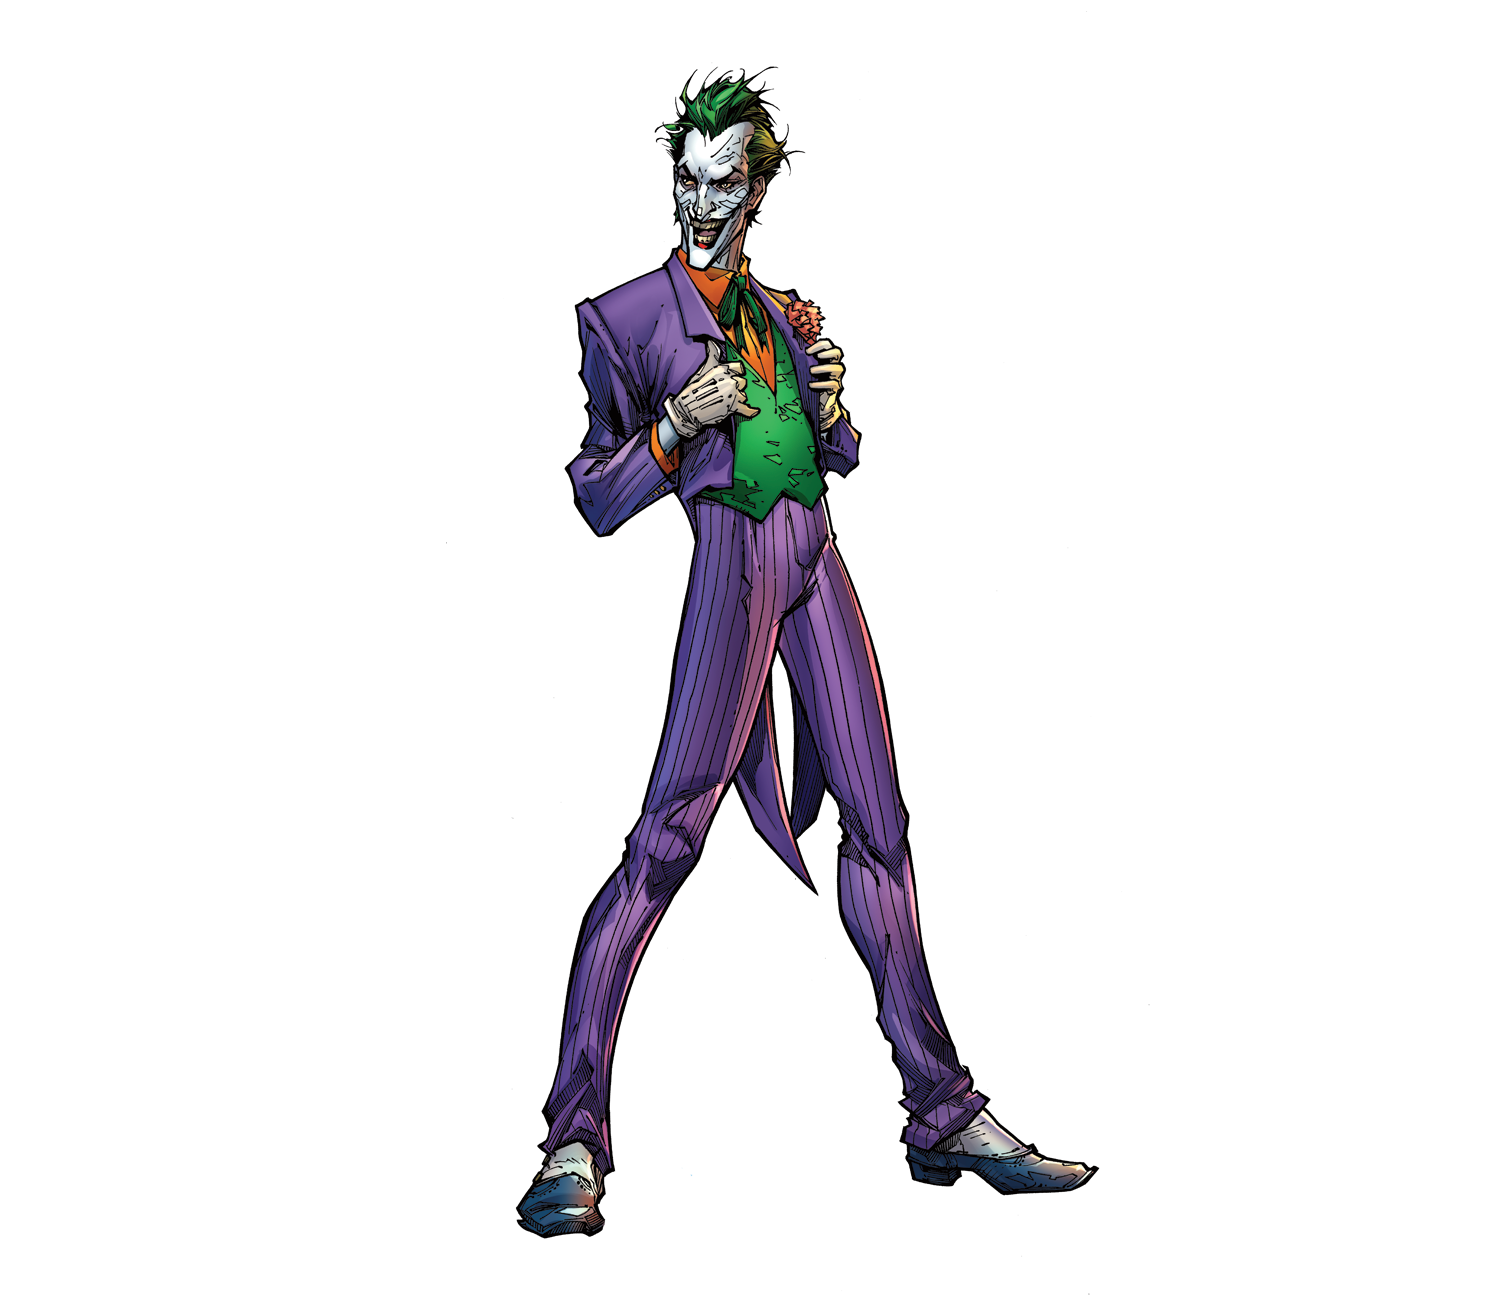 File:LEGO Batman Movie Joker.